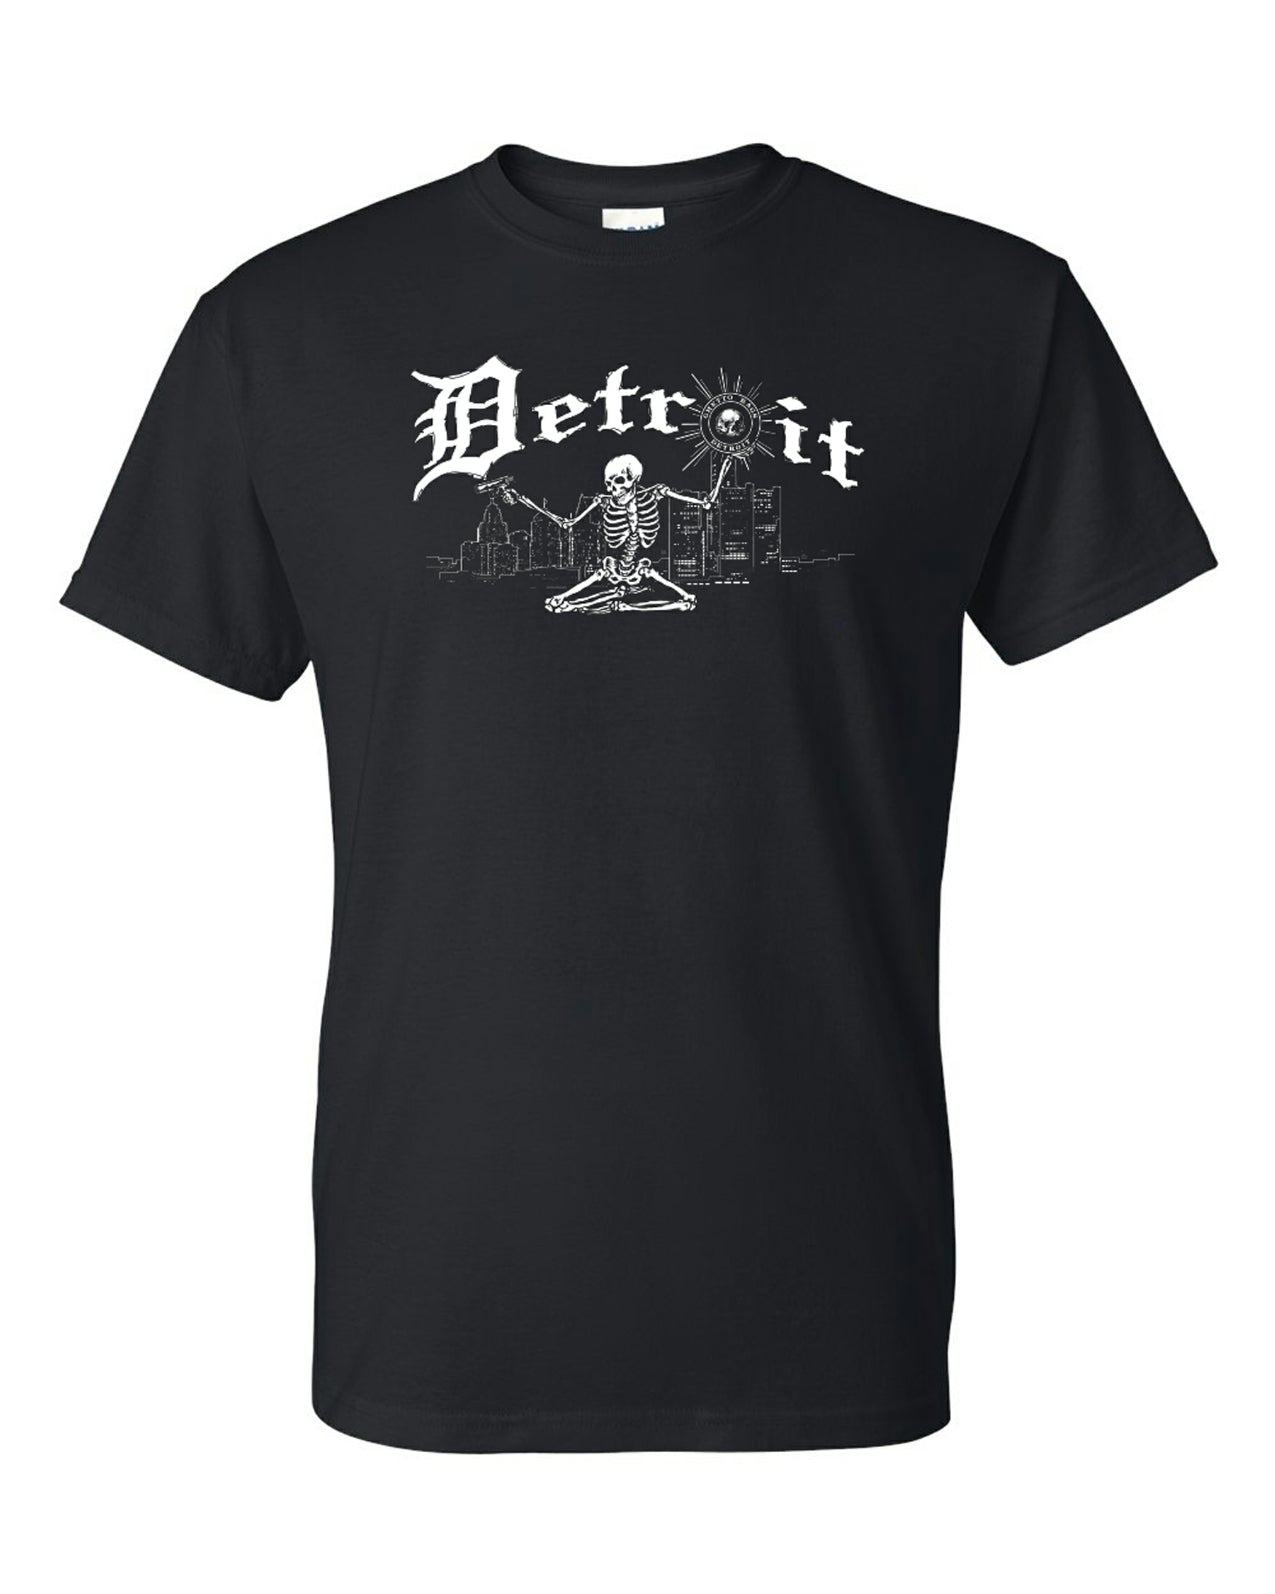 Gigantic Jerseys and The Spirit of Detroit - Vintage Detroit